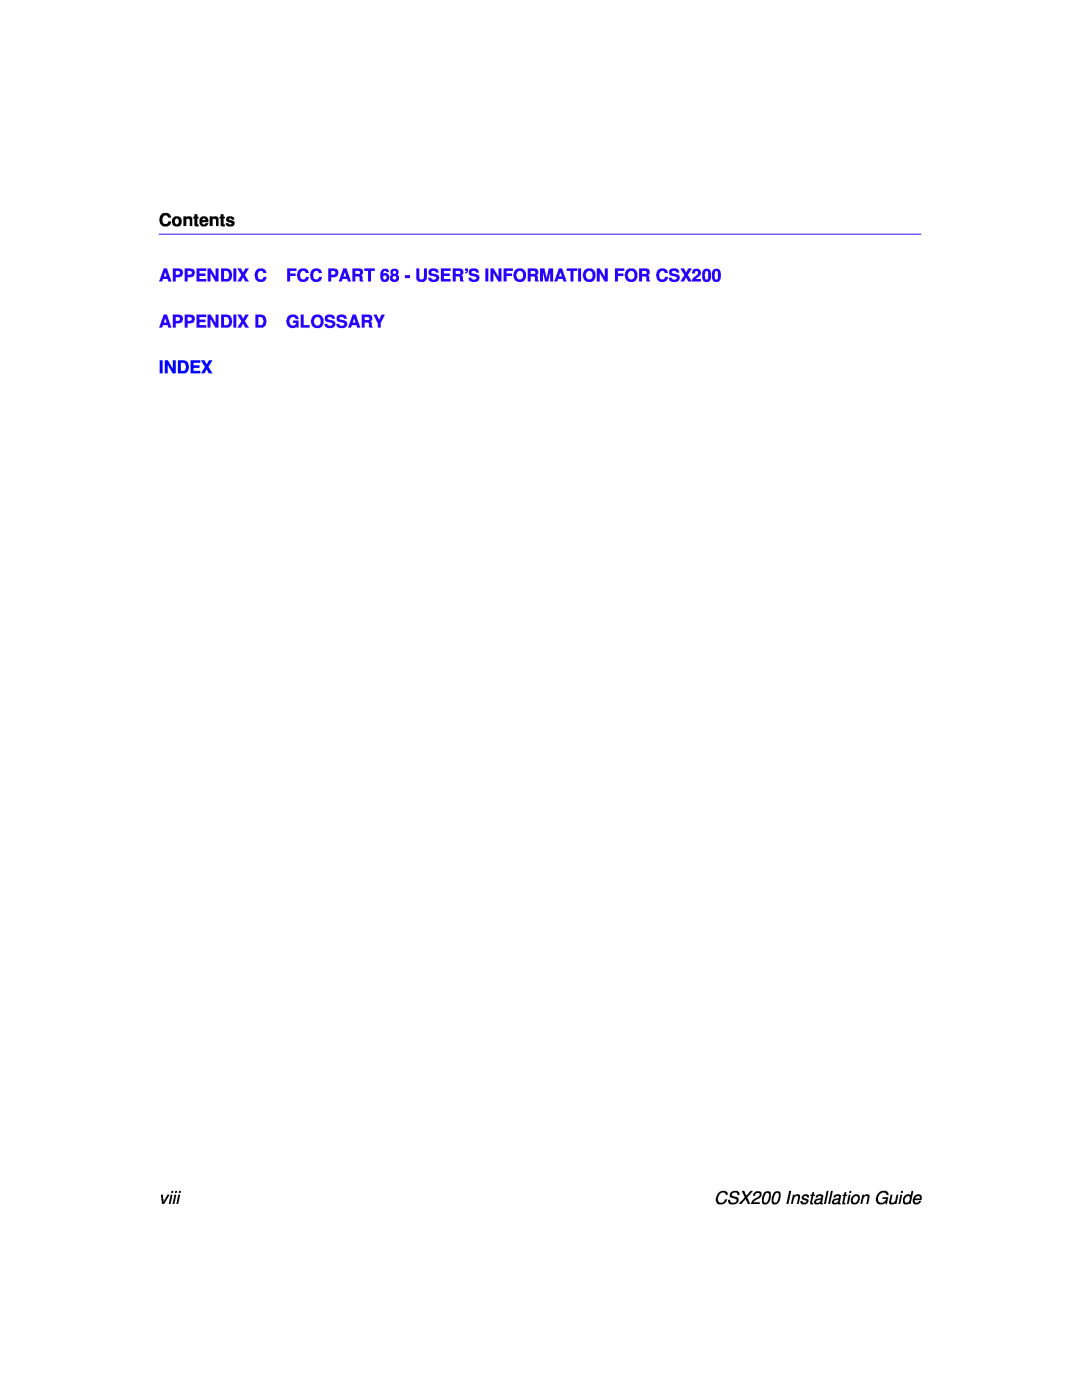 Cabletron Systems Contents, APPENDIX C FCC PART 68 - USER’S INFORMATION FOR CSX200, Appendix D Glossary, Index, viii 